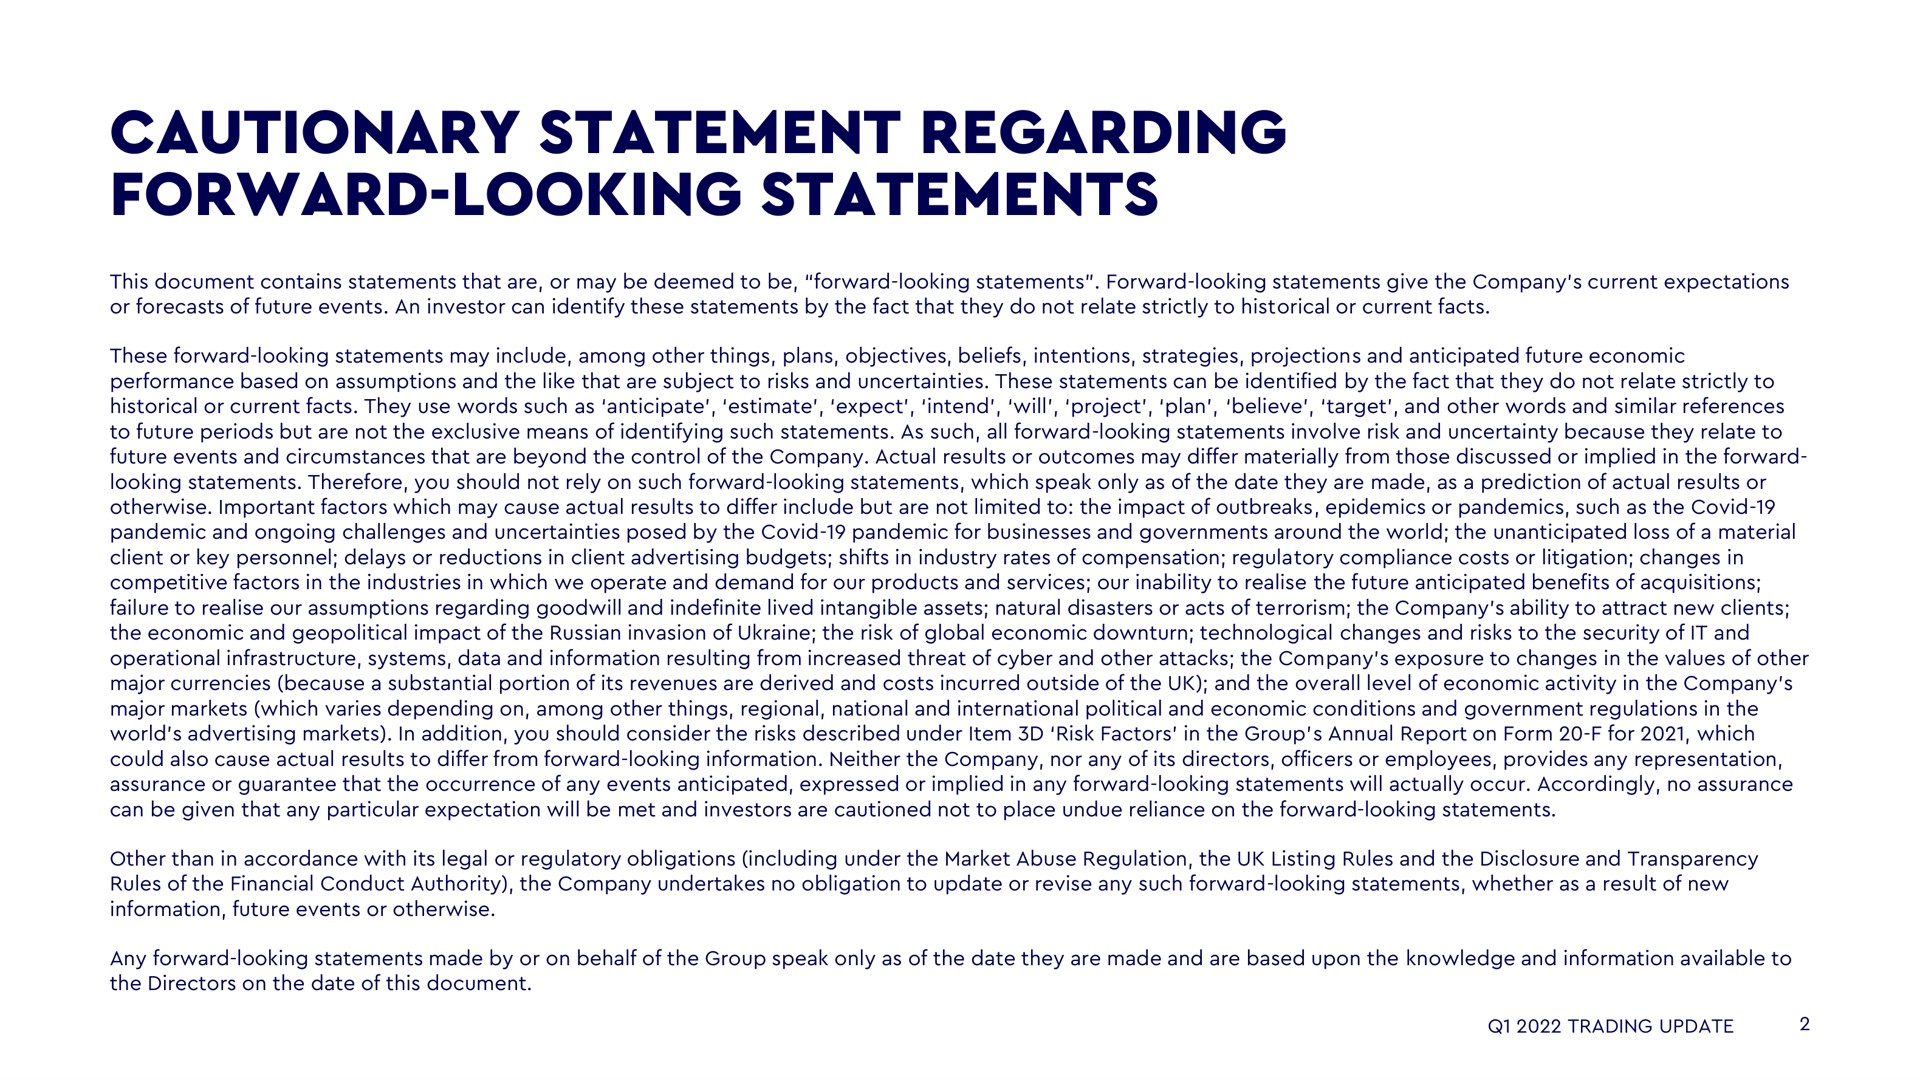 cautionary statement regarding forward looking statements | WPP